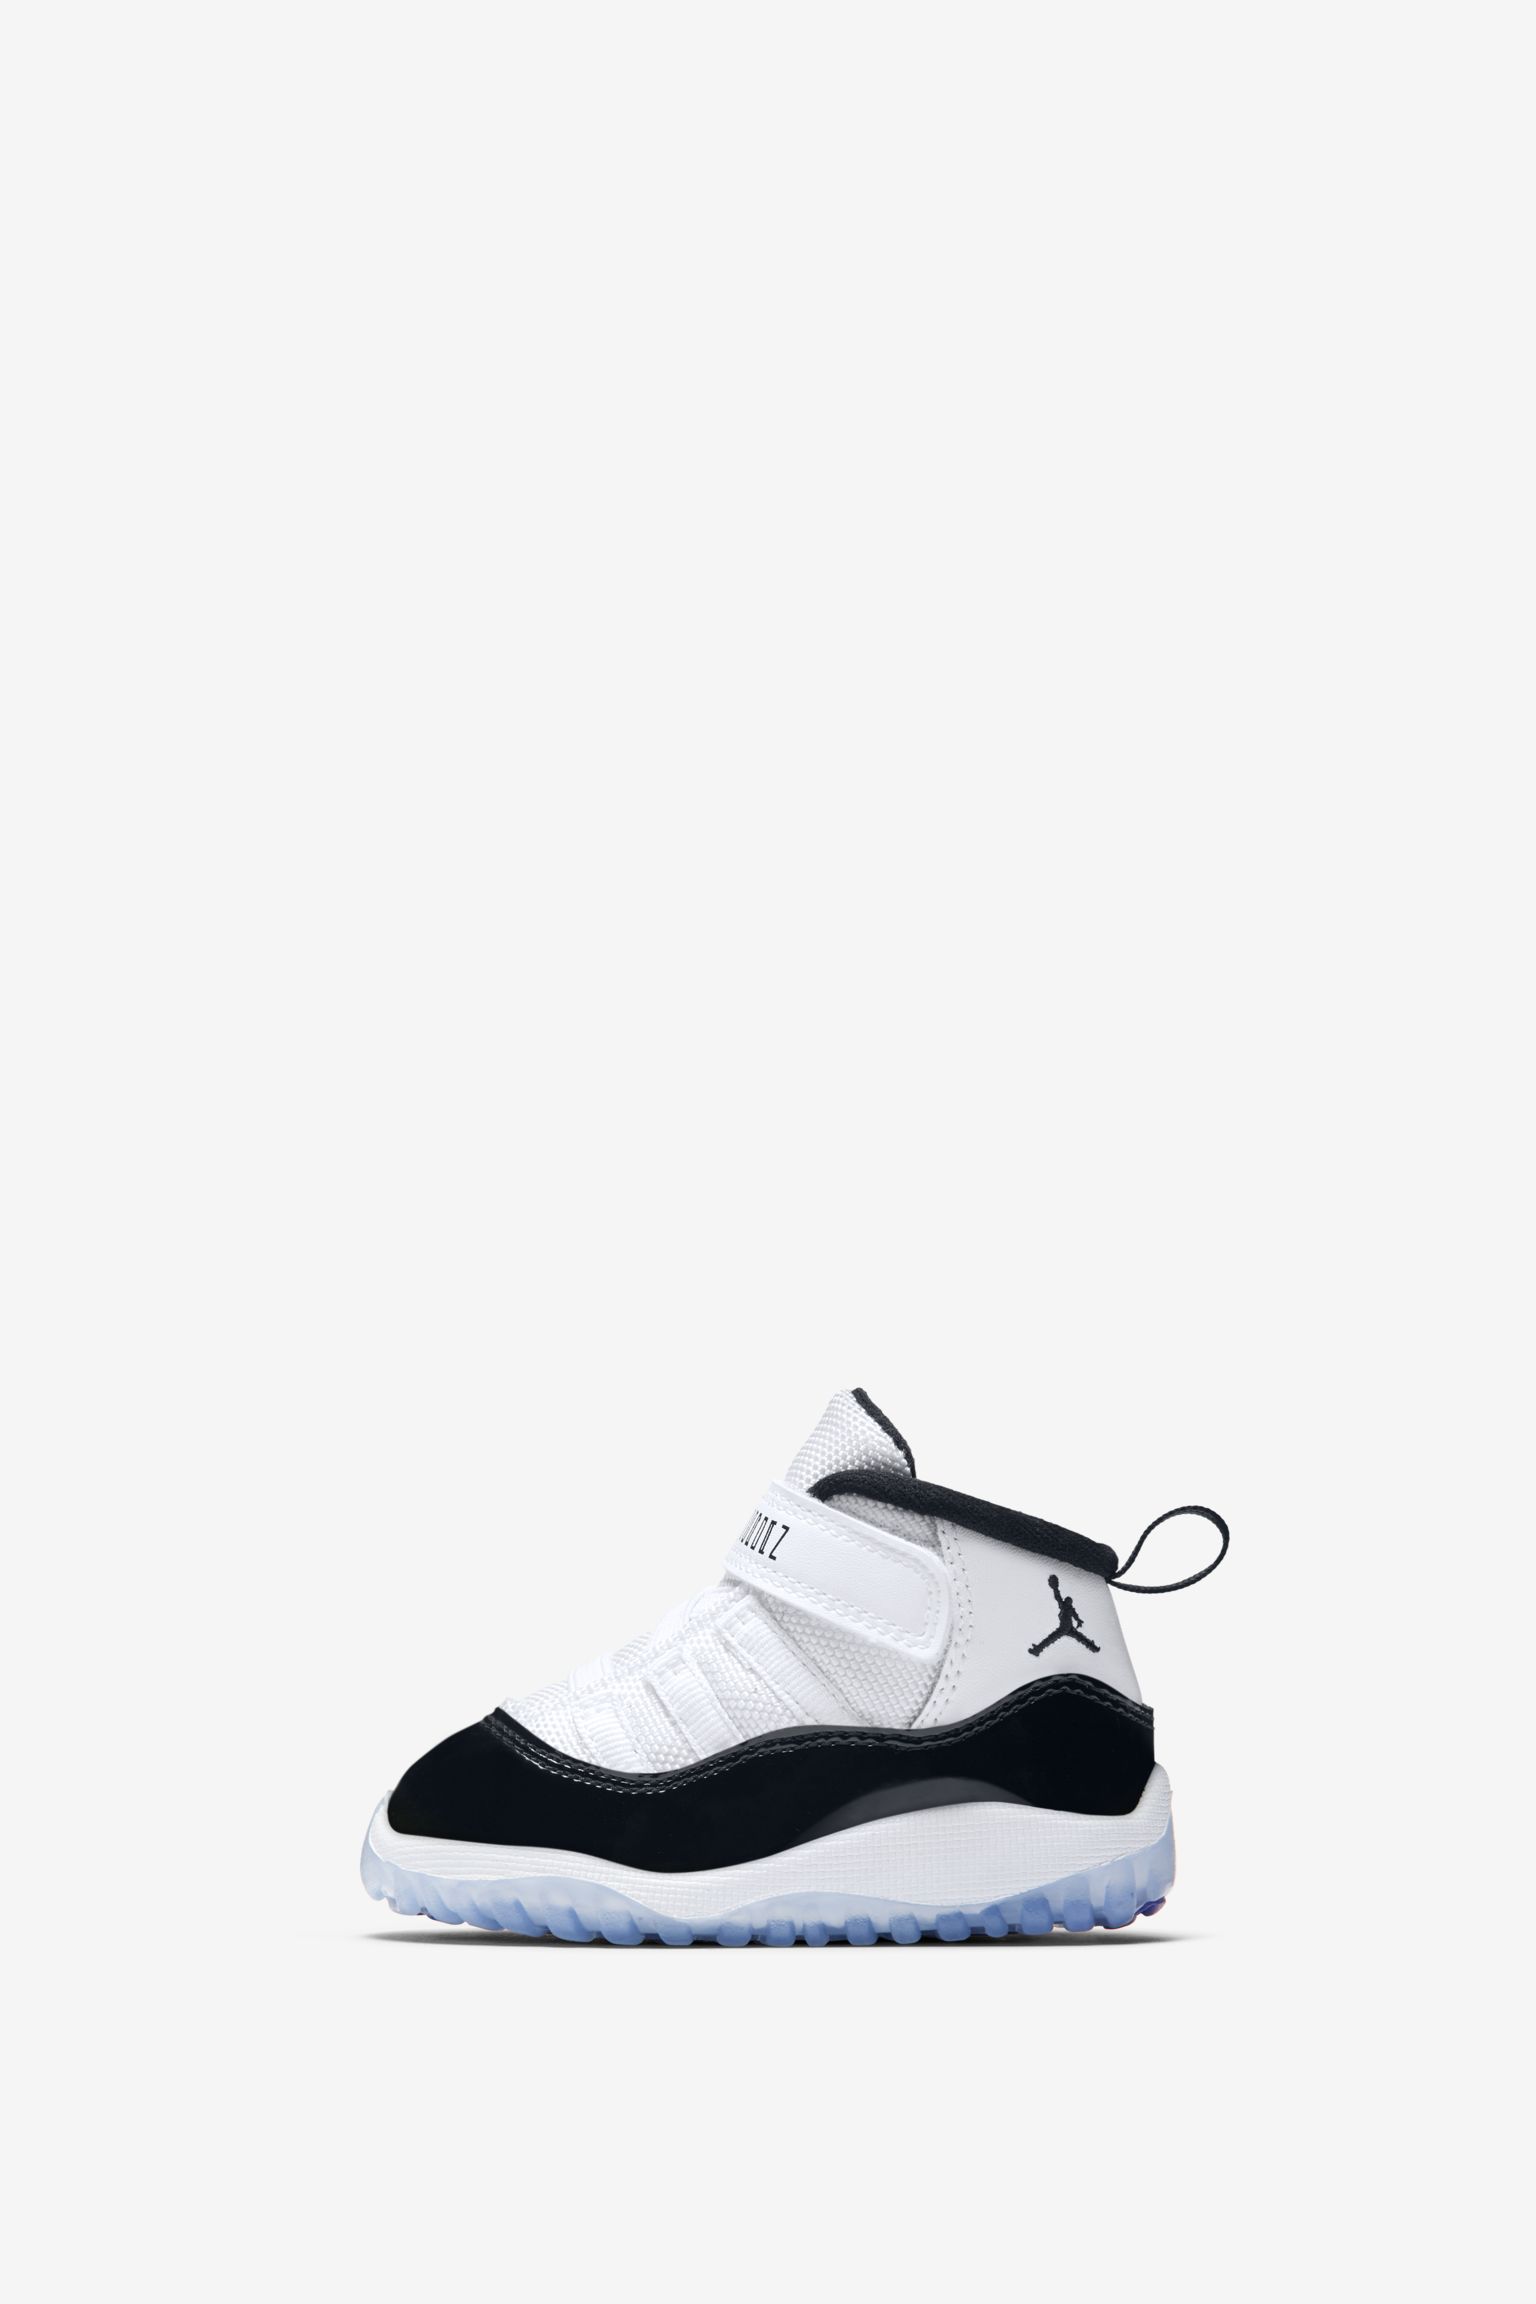 Air Jordan 11 'Concord' Release Date. Nike SNKRS